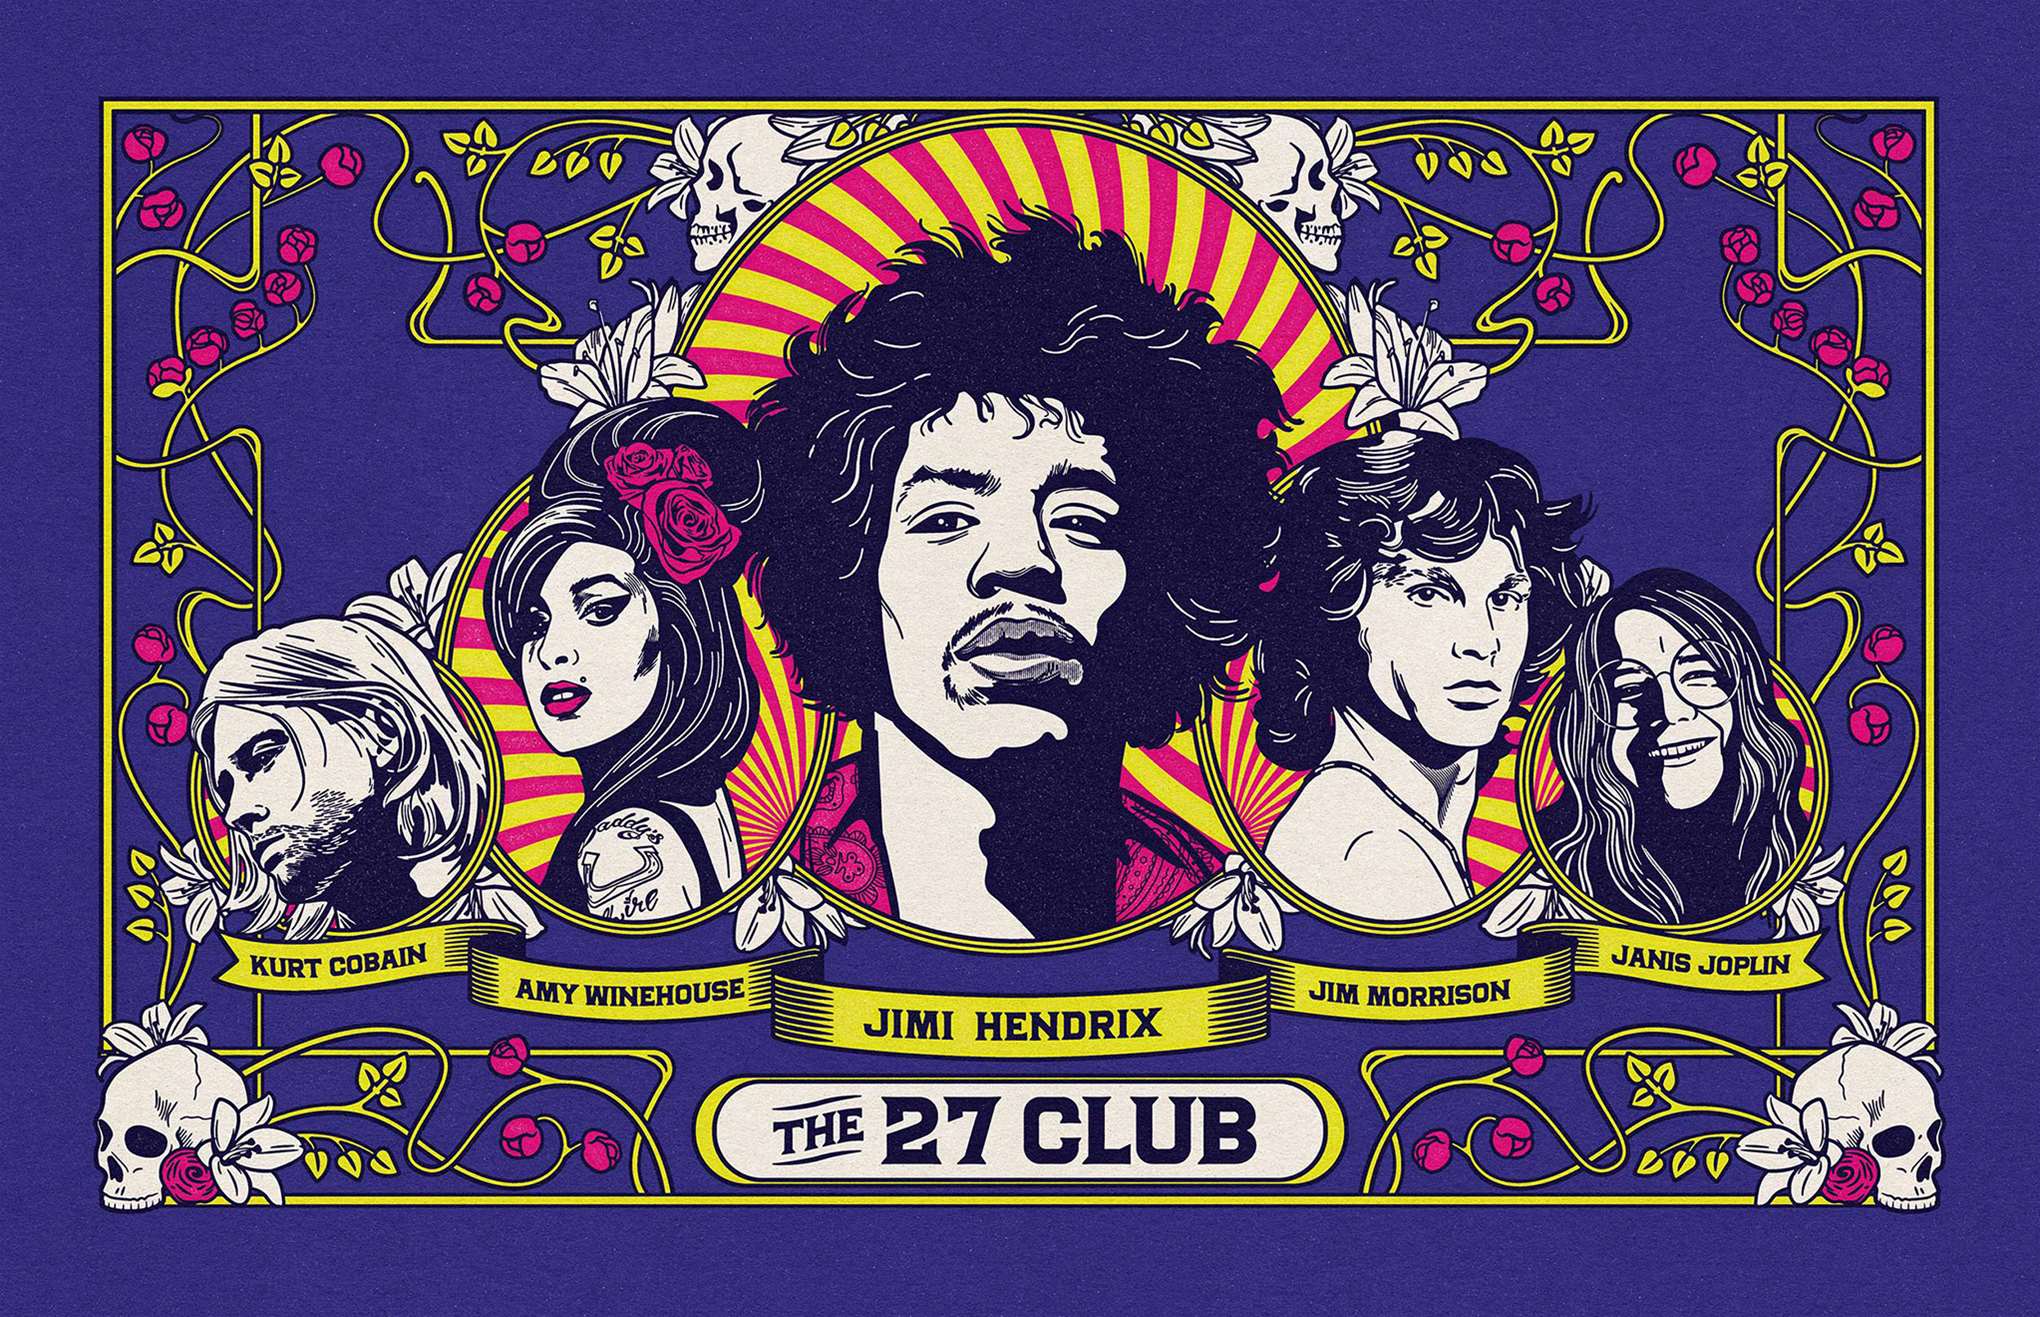 Susan Burghart, The 27 Club poster design with Jimi Hendrix, Amy Winehouse, Kurt Cobain, Jim Morrison and Janis Joplin.